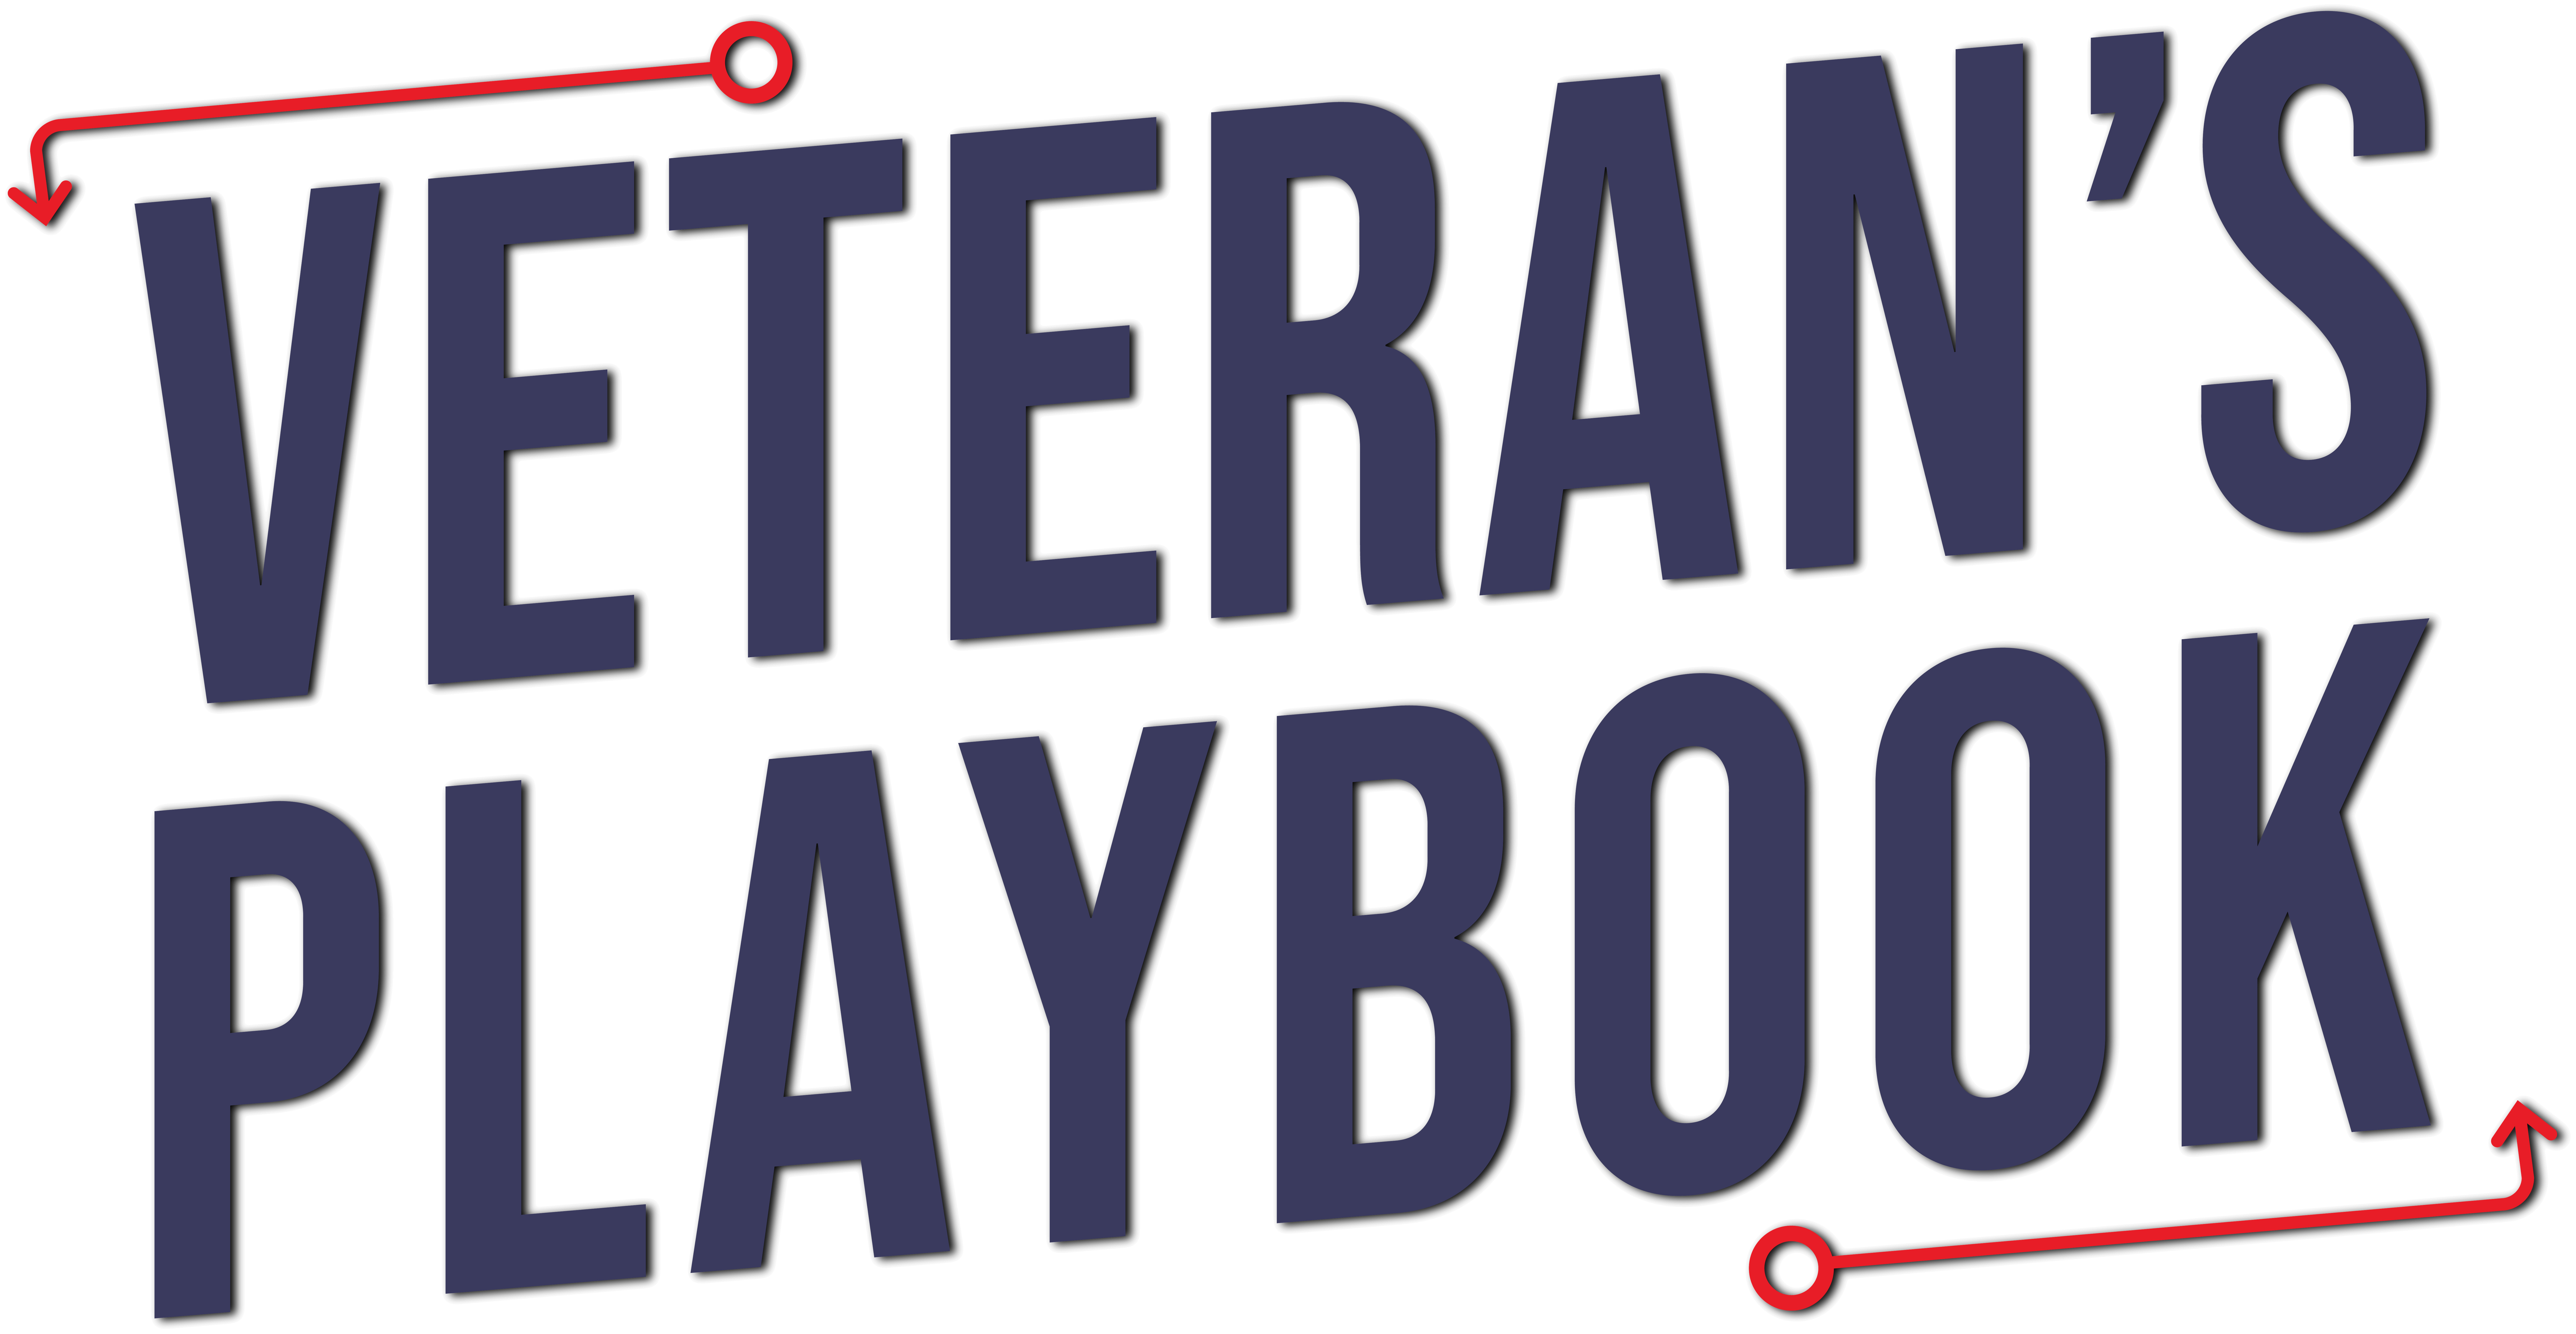 Veteran's Playbook MAIN logo red blue (1)